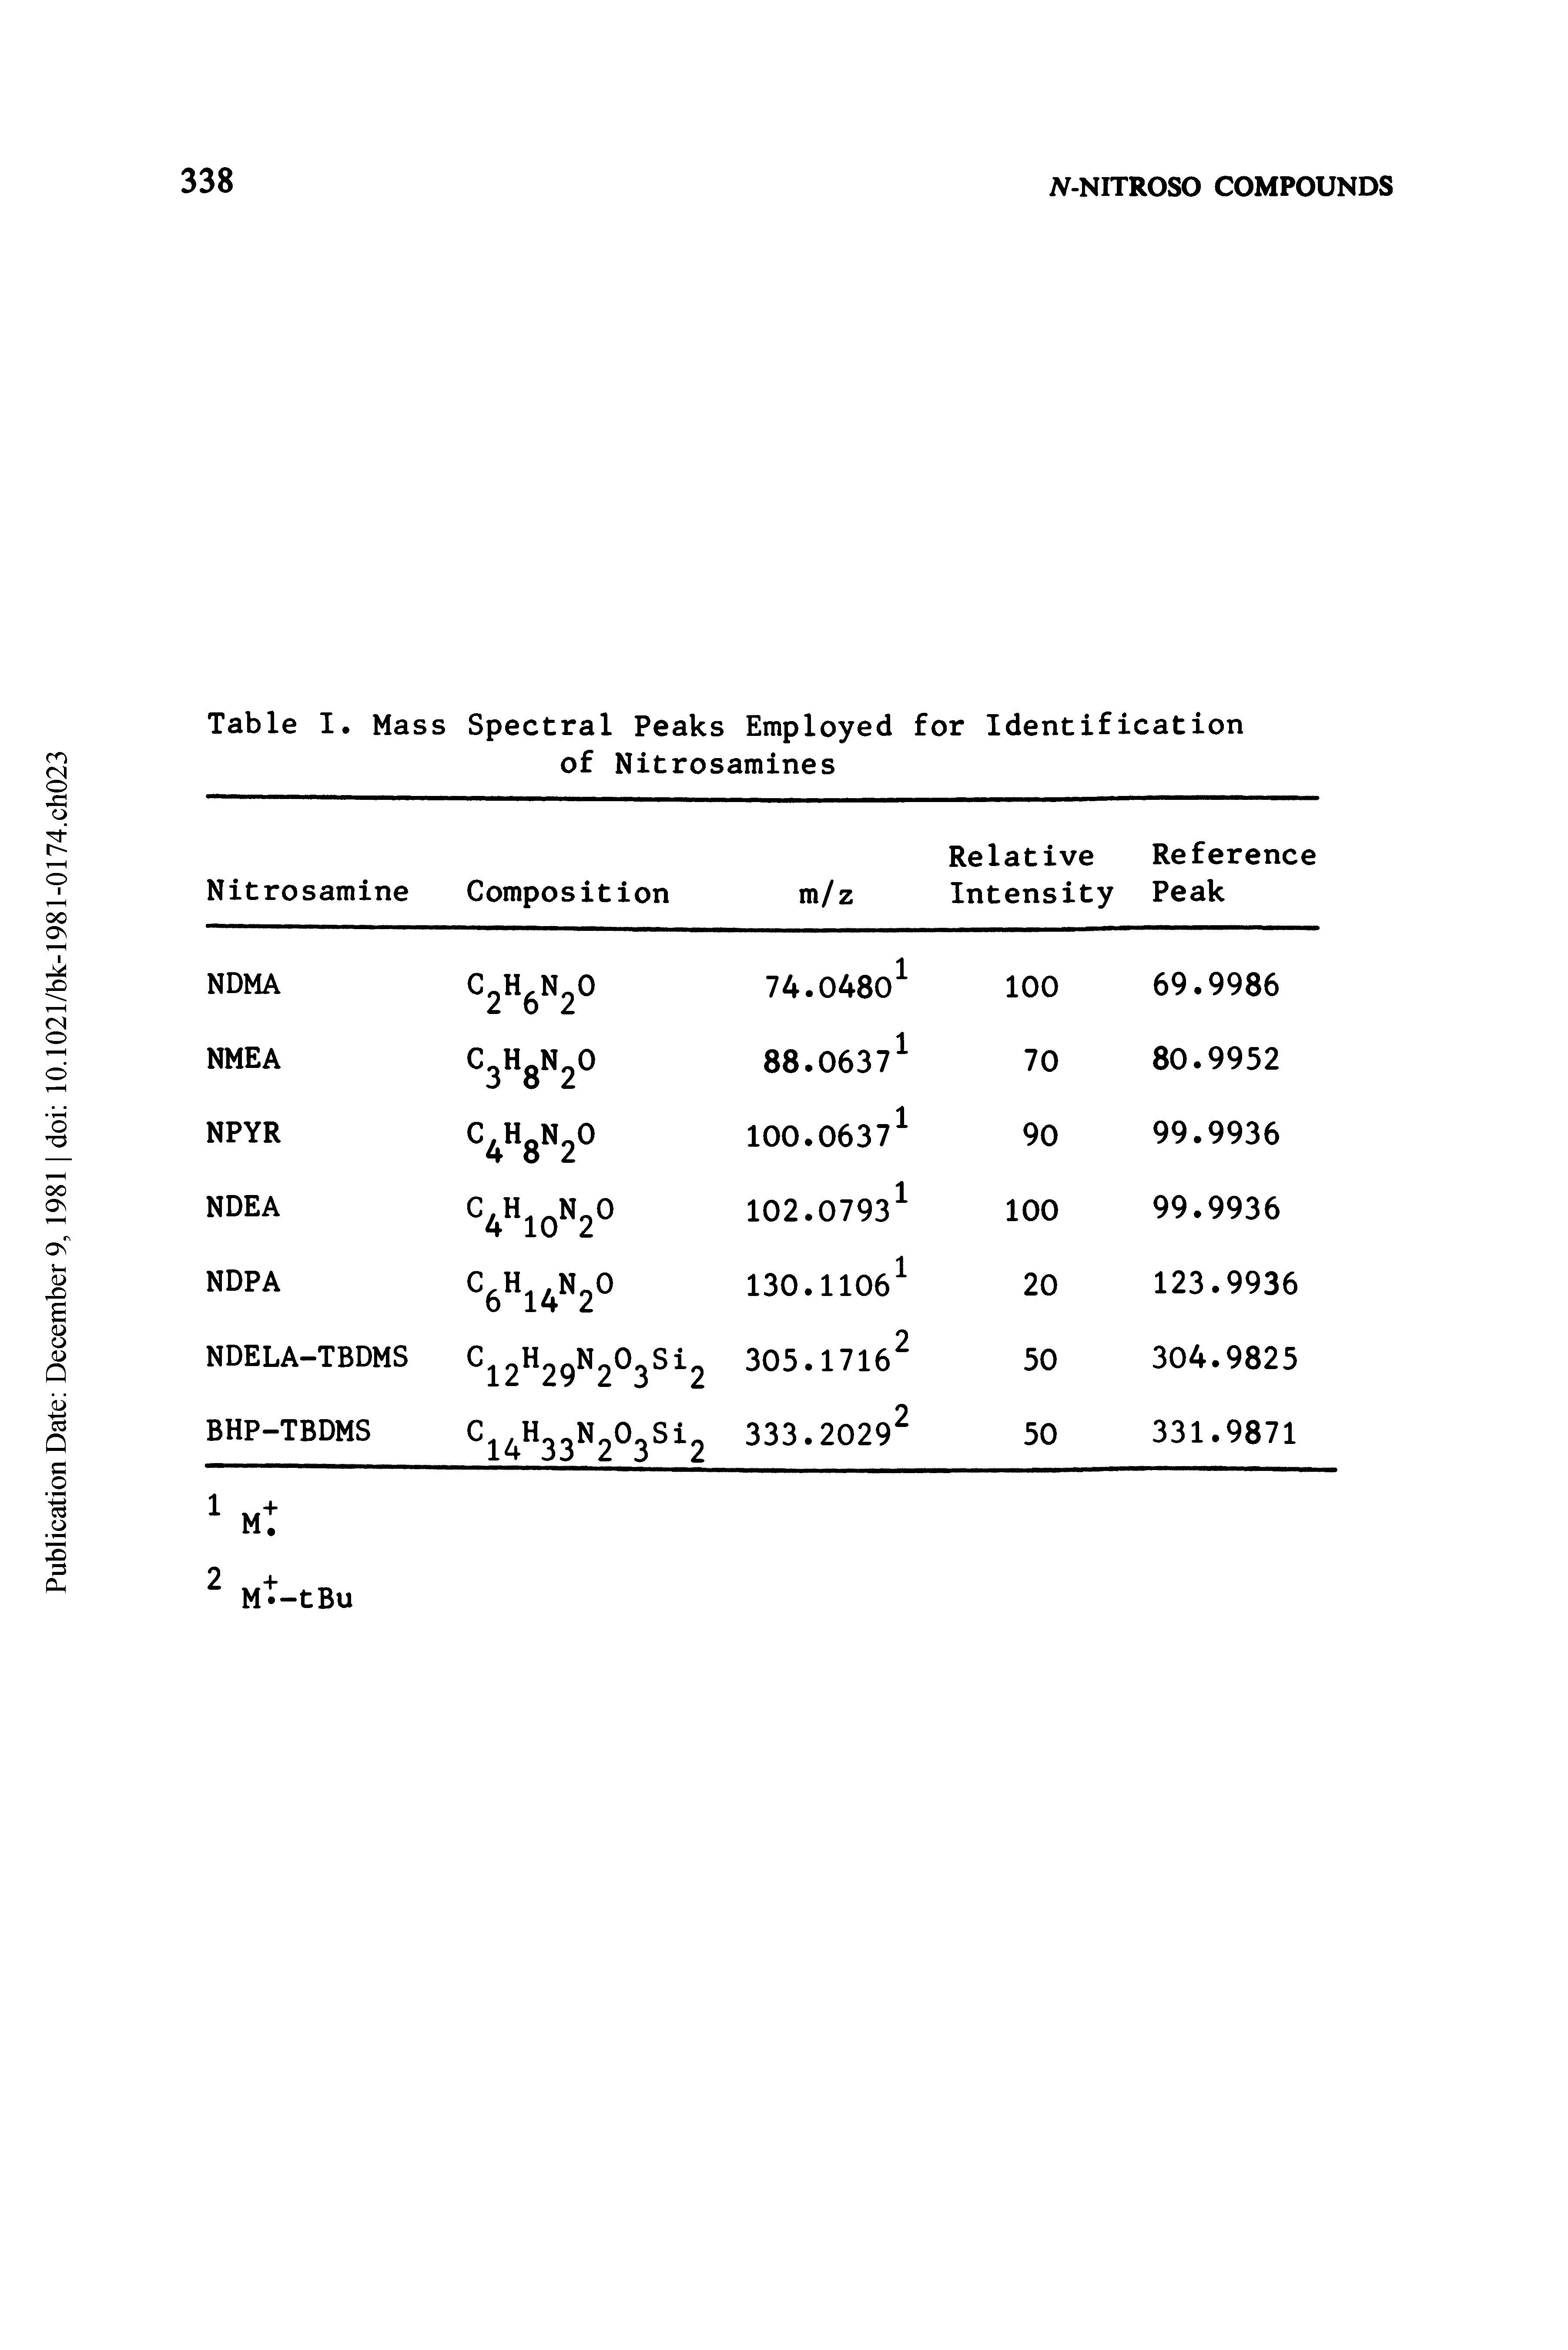 Table I. Mass Spectral Peaks Employed for Identification of Nitrosamines...